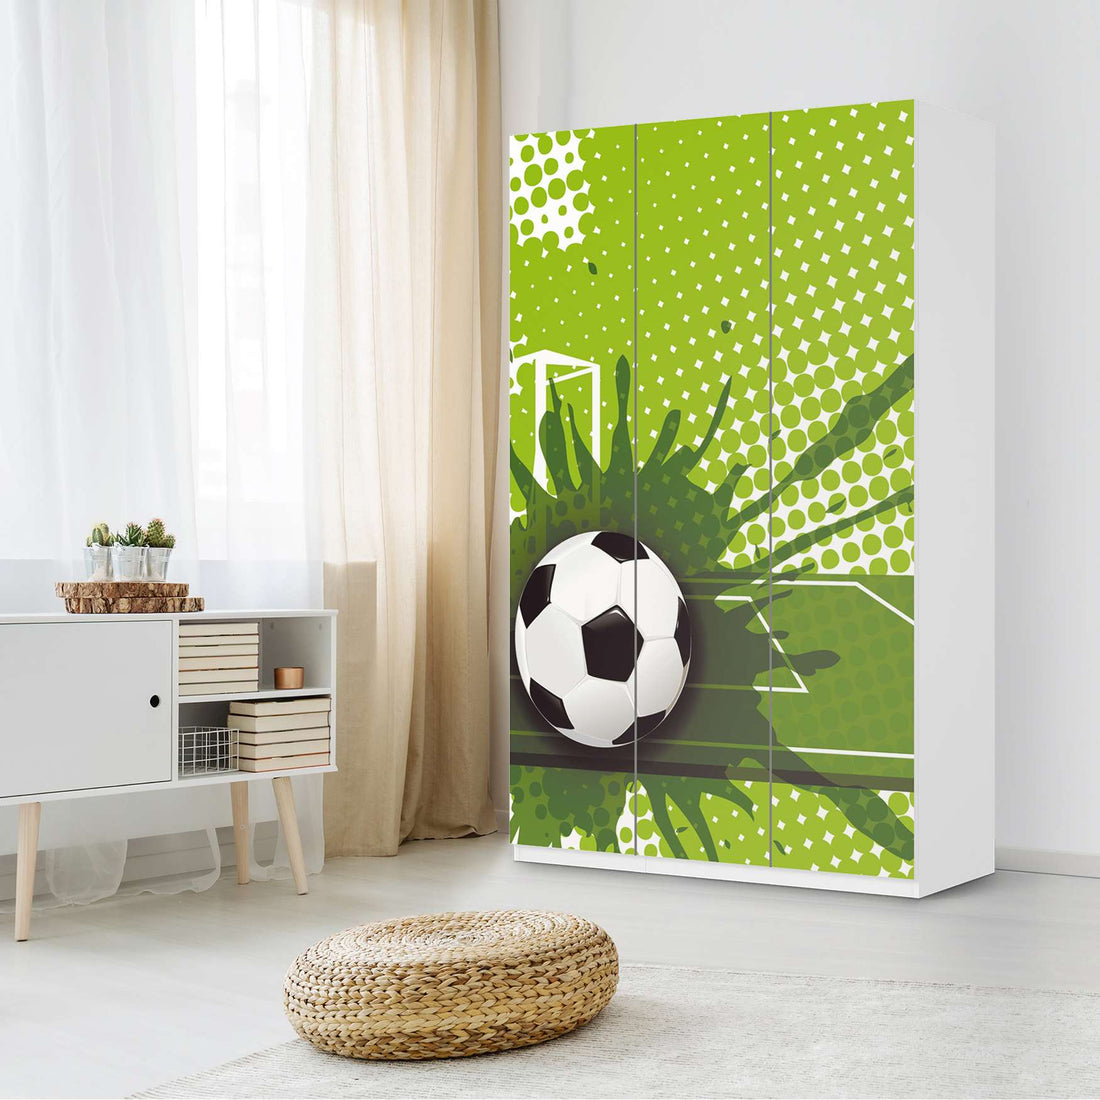 Selbstklebende Folie Goal - IKEA Pax Schrank 236 cm Höhe - 3 Türen - Kinderzimmer